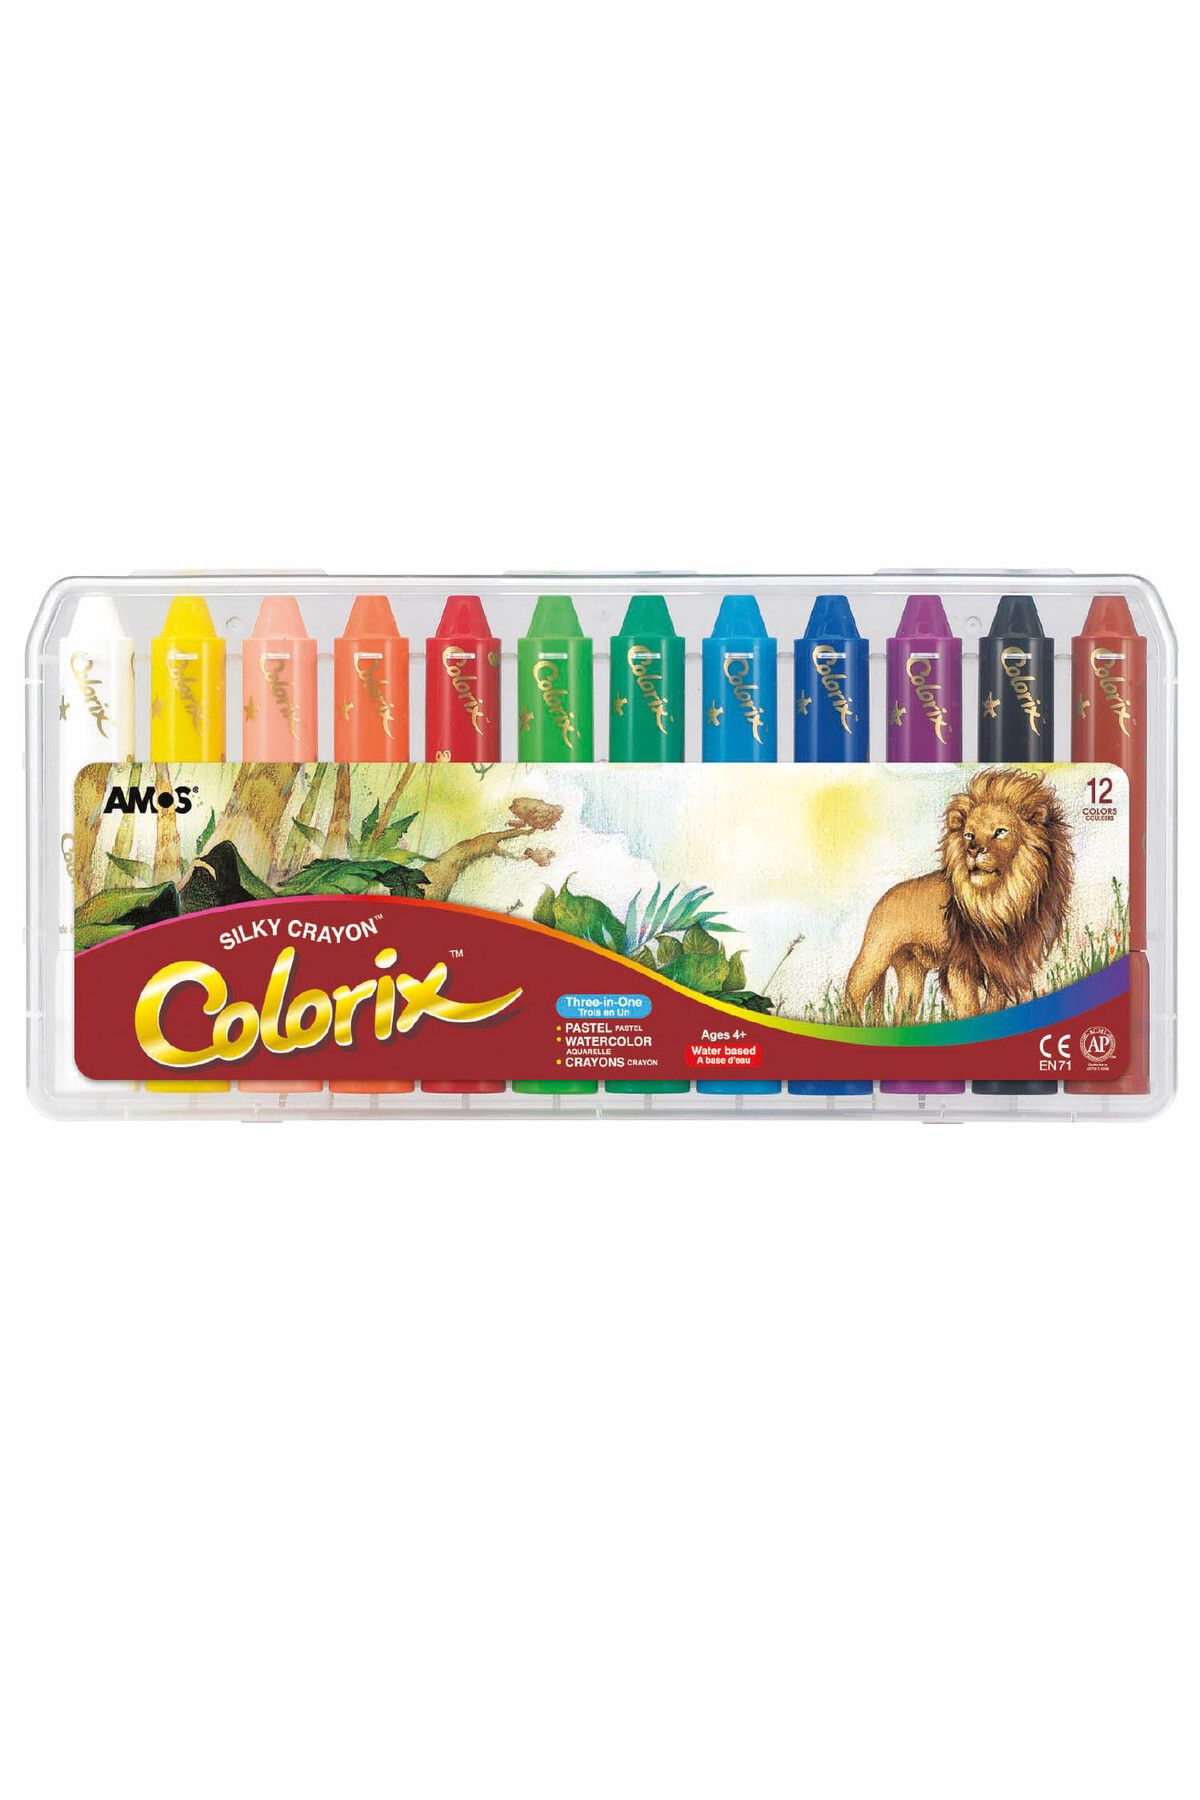 Amos Silky Crayon Colorix - Üçü Bir Arada Boya (MUM BOYA, PASTEL BOYA, SULUBOYA) - 12 Renk